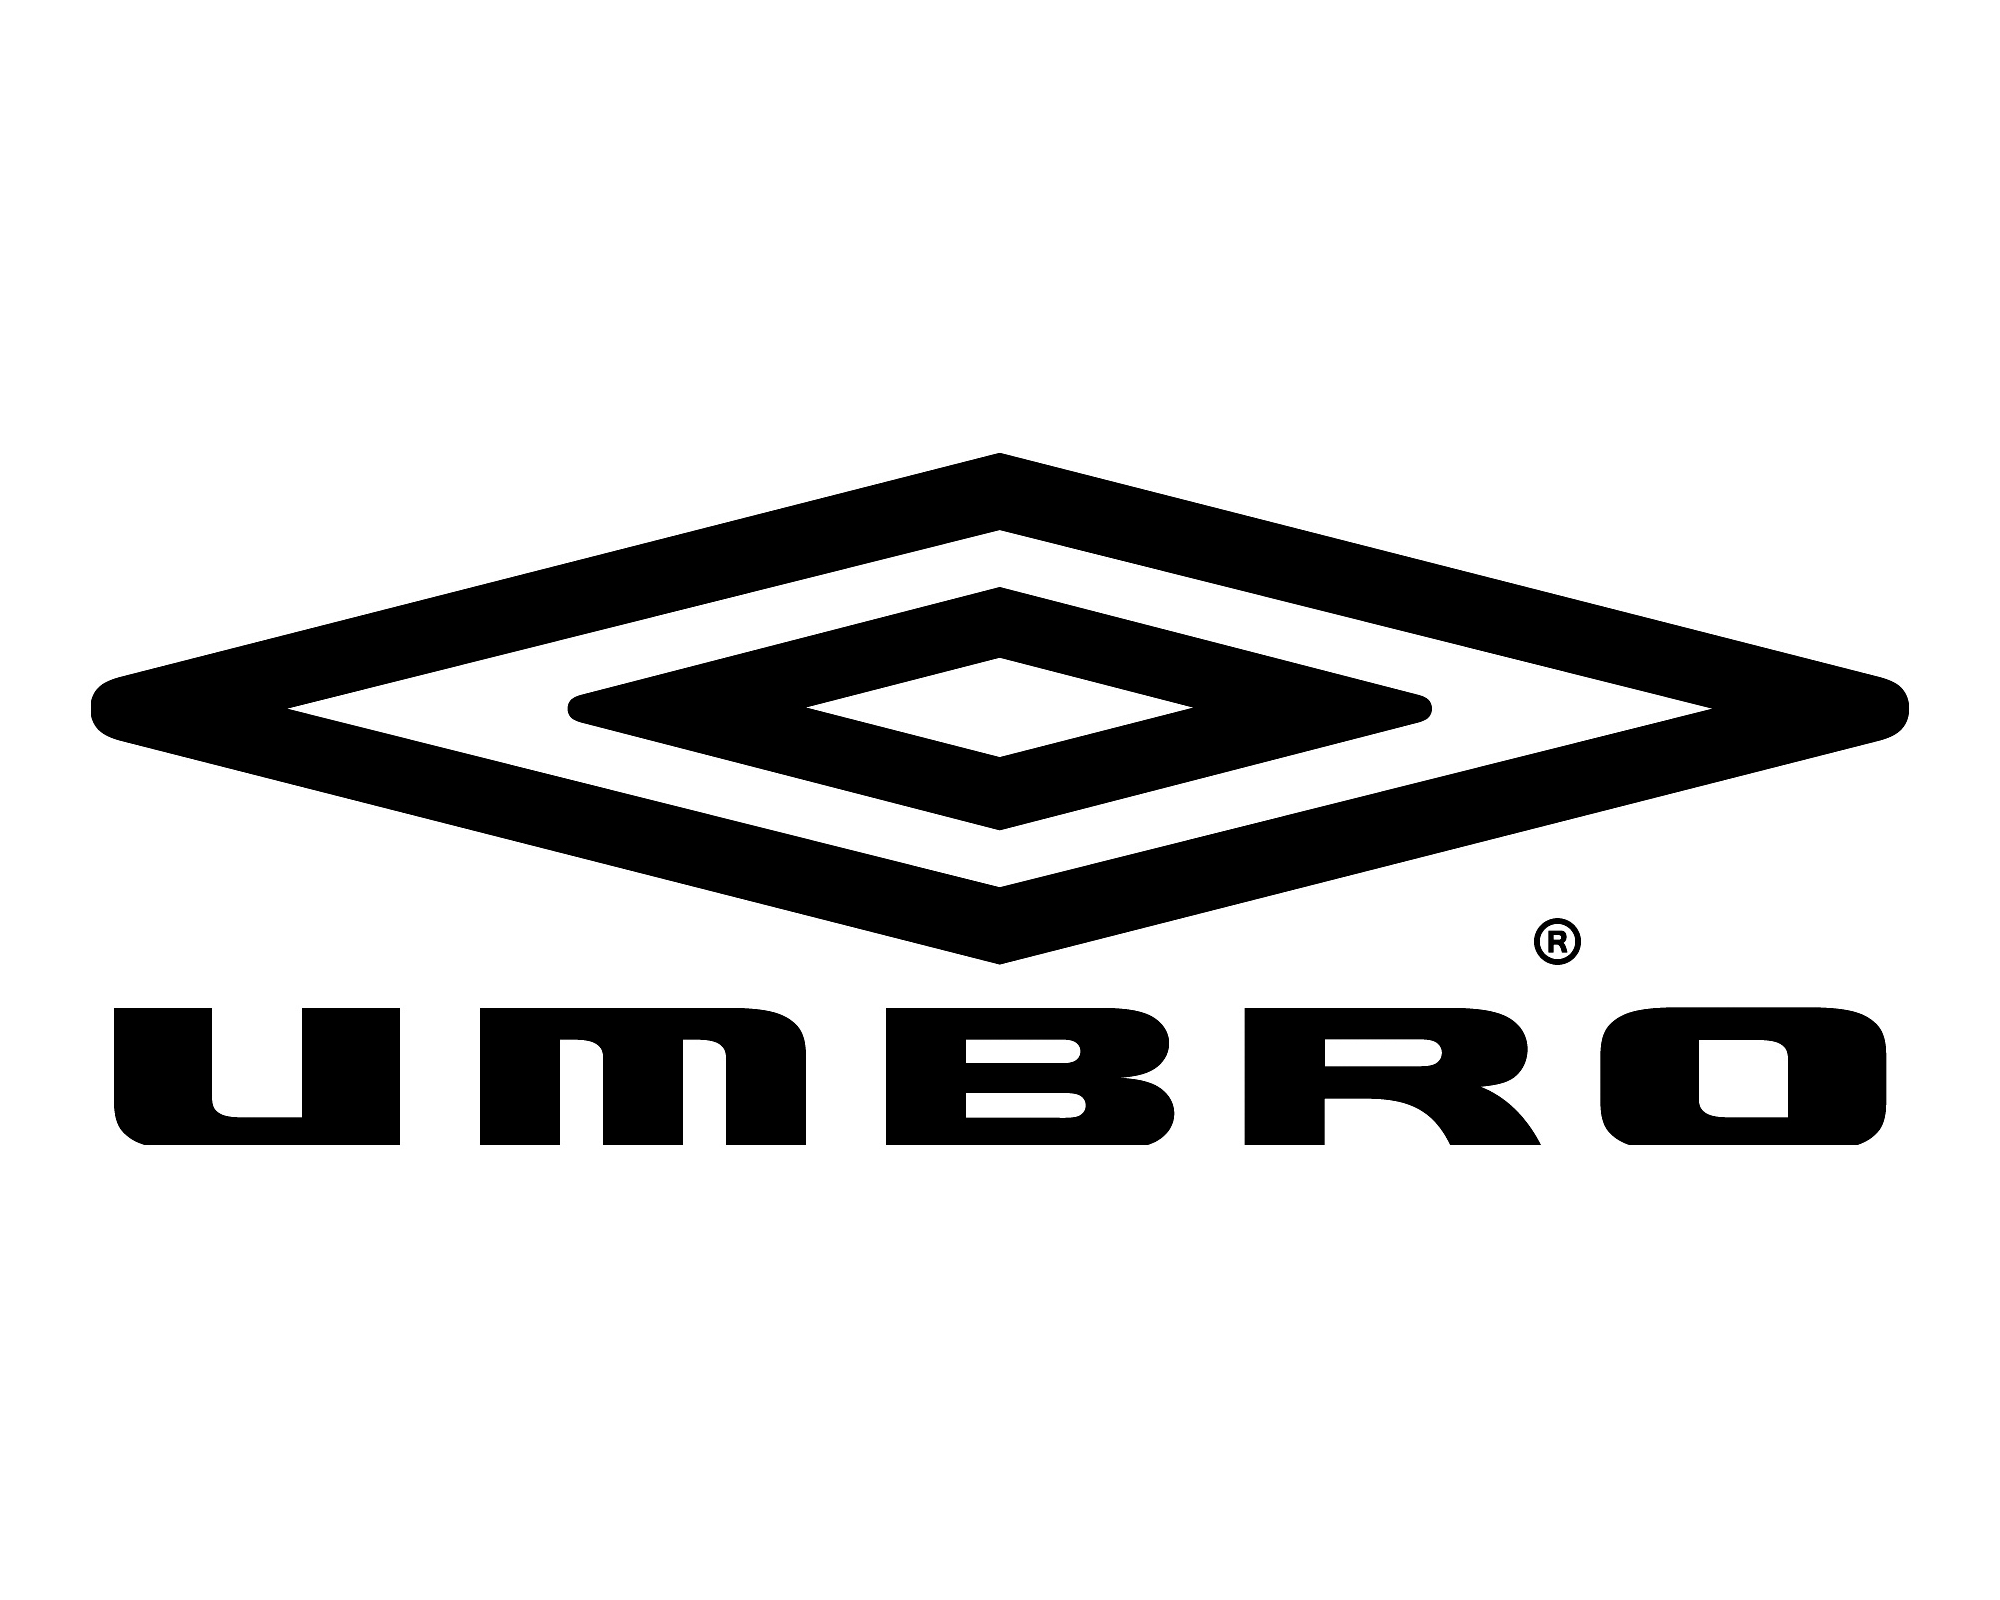 1970s Umbro Logo - Umbro logo | Logok